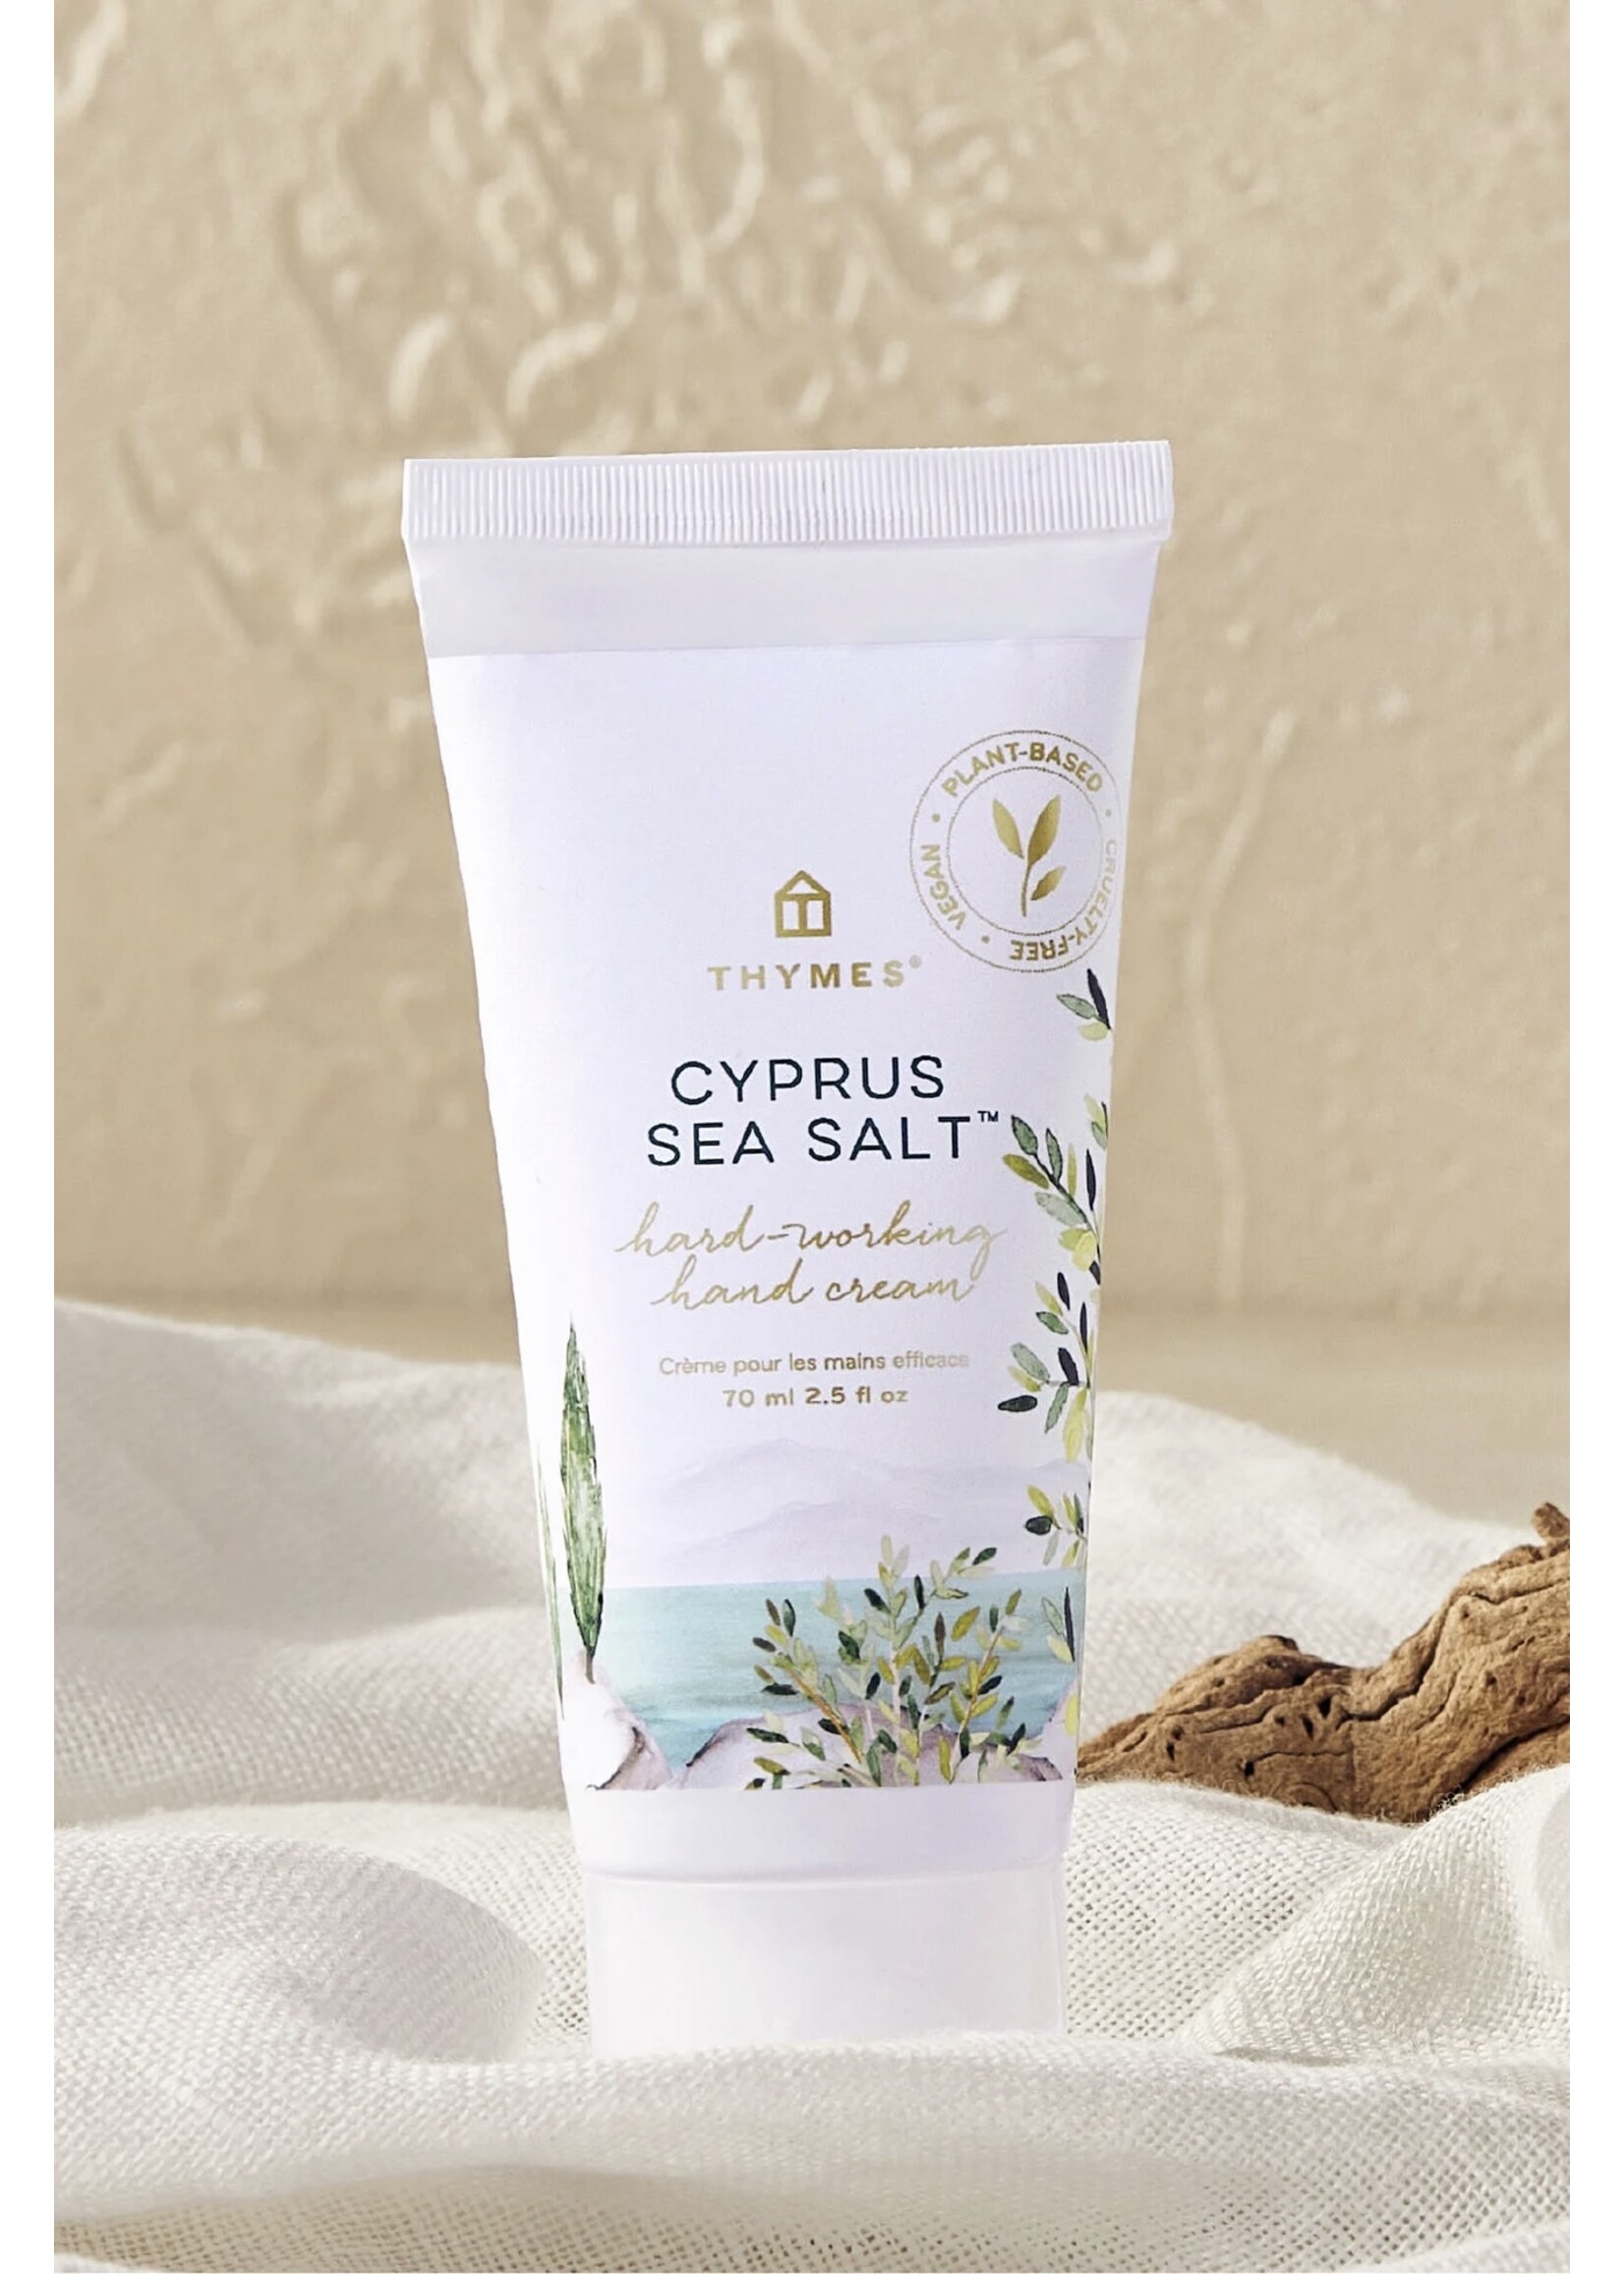 Thymes Cyprus Sea Salt Hard-Working Hand Cream